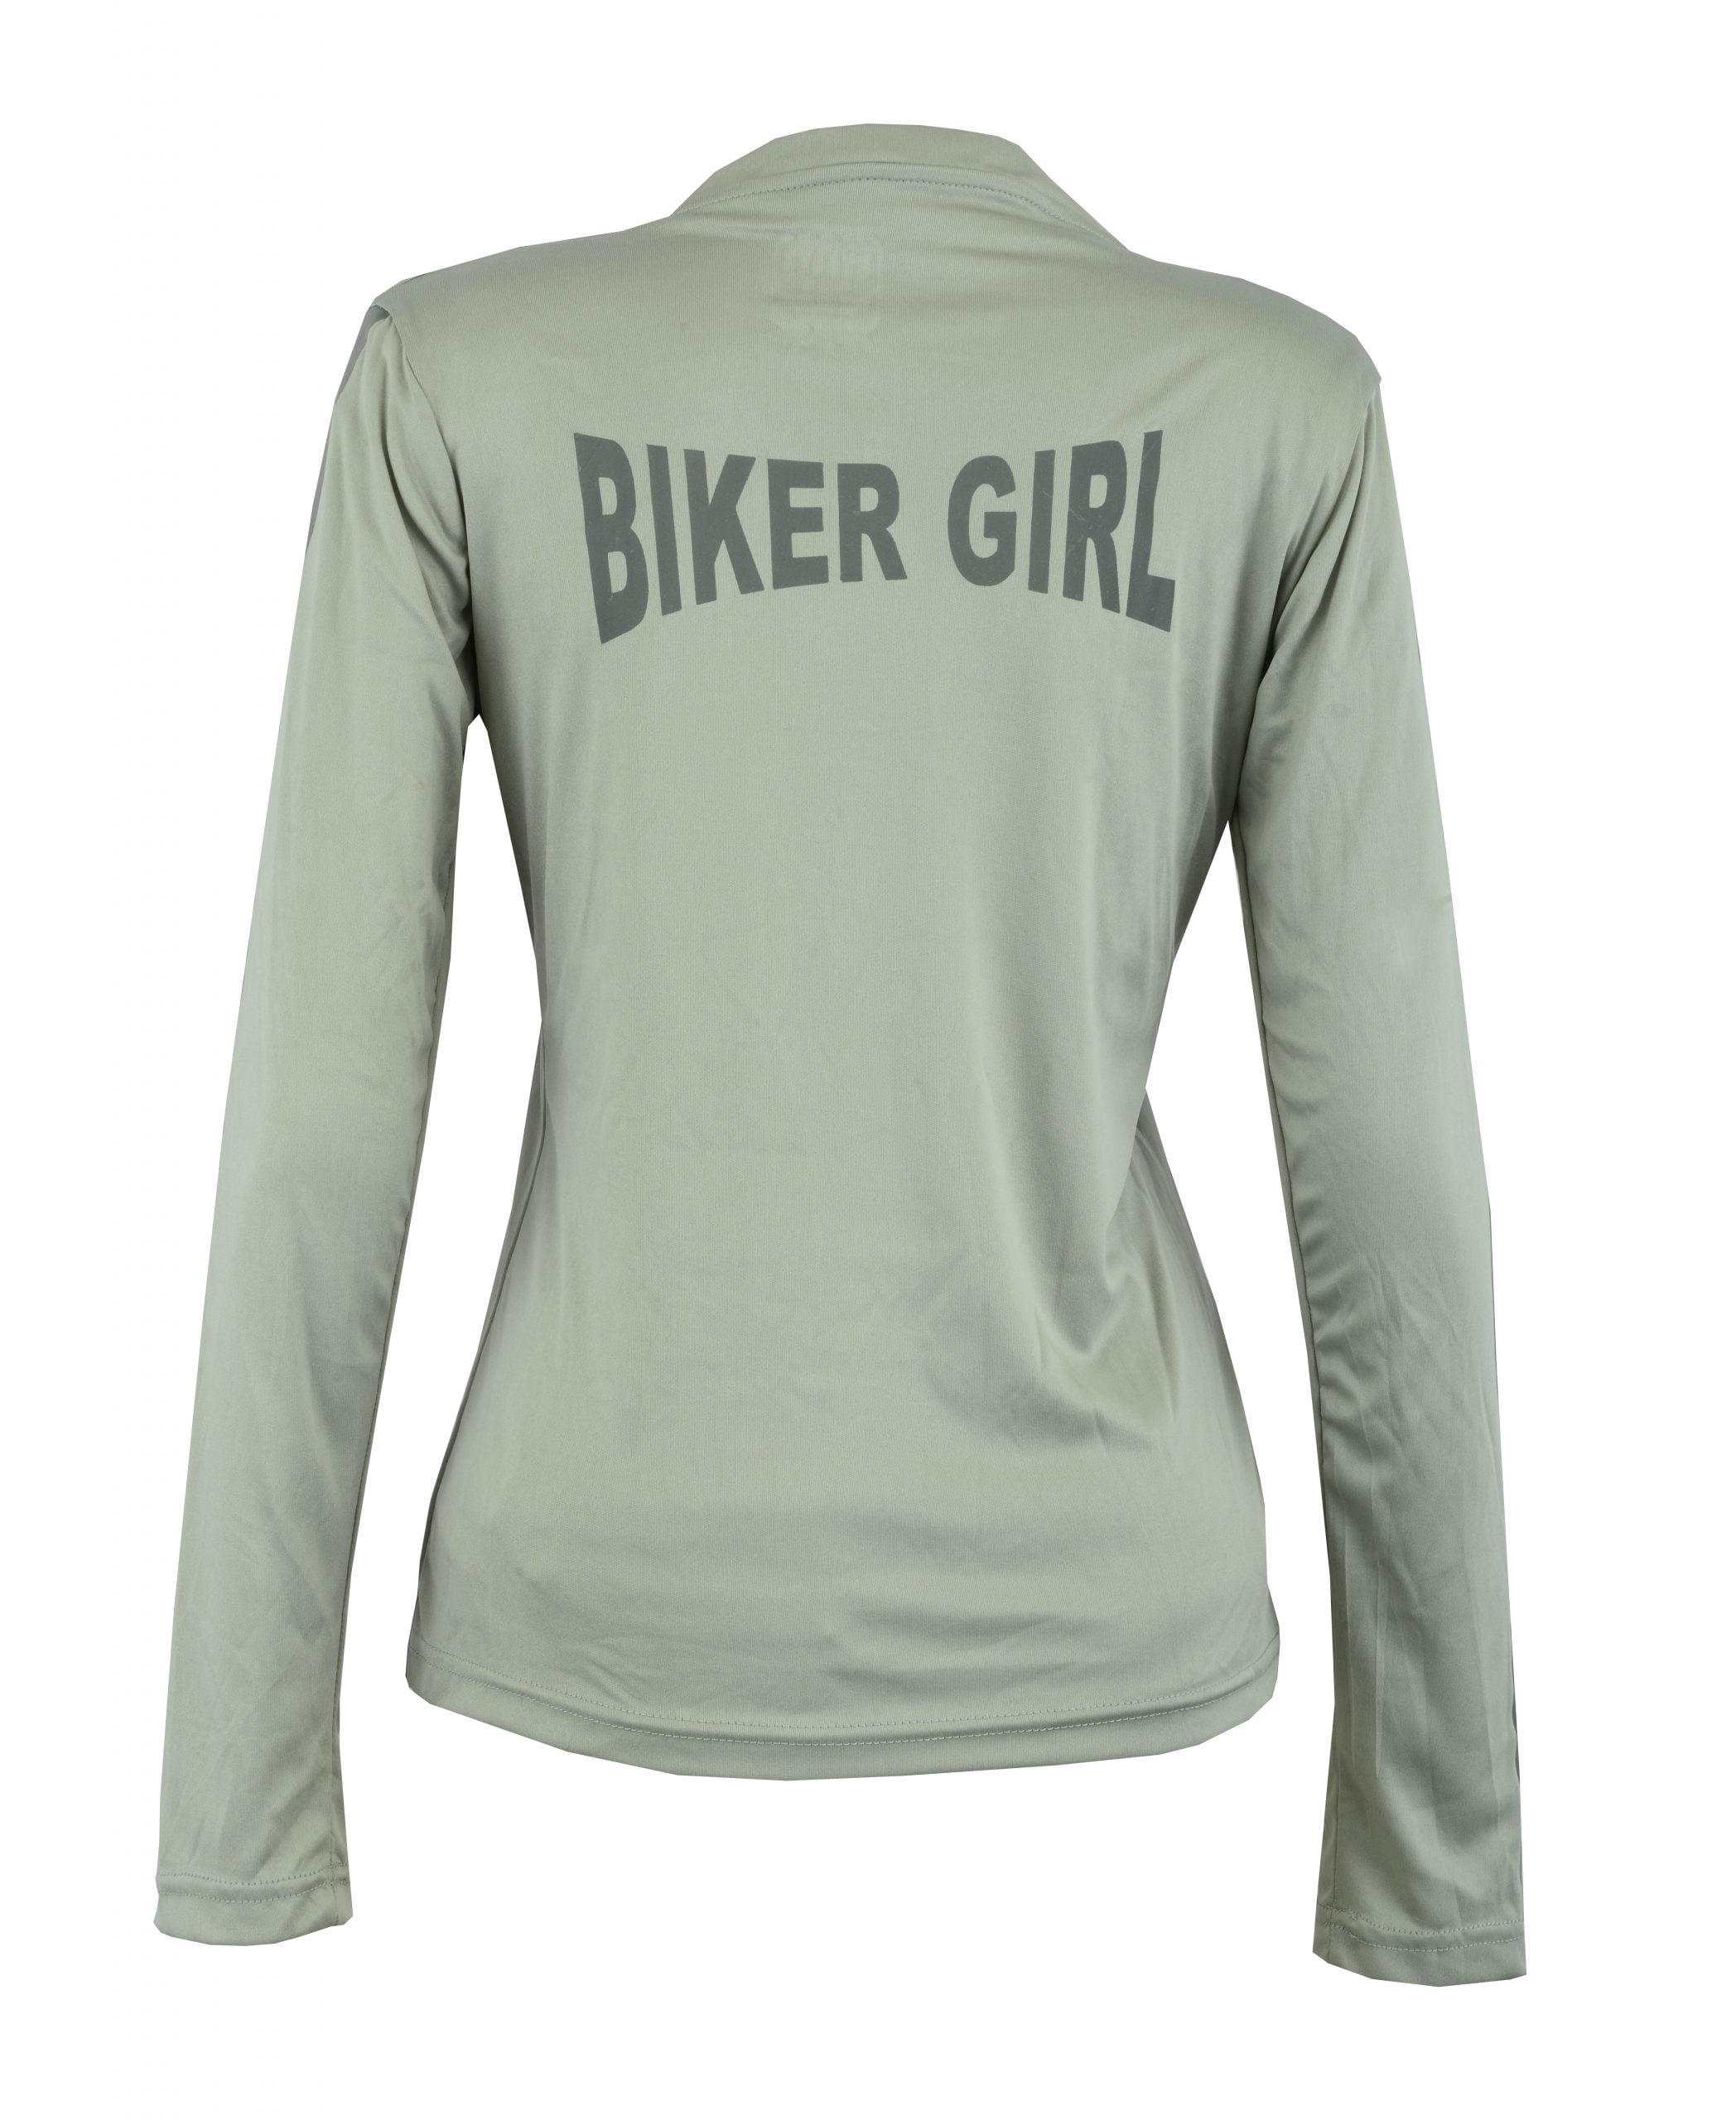 Women's Reflective Shirt -Biker Girl -Grey